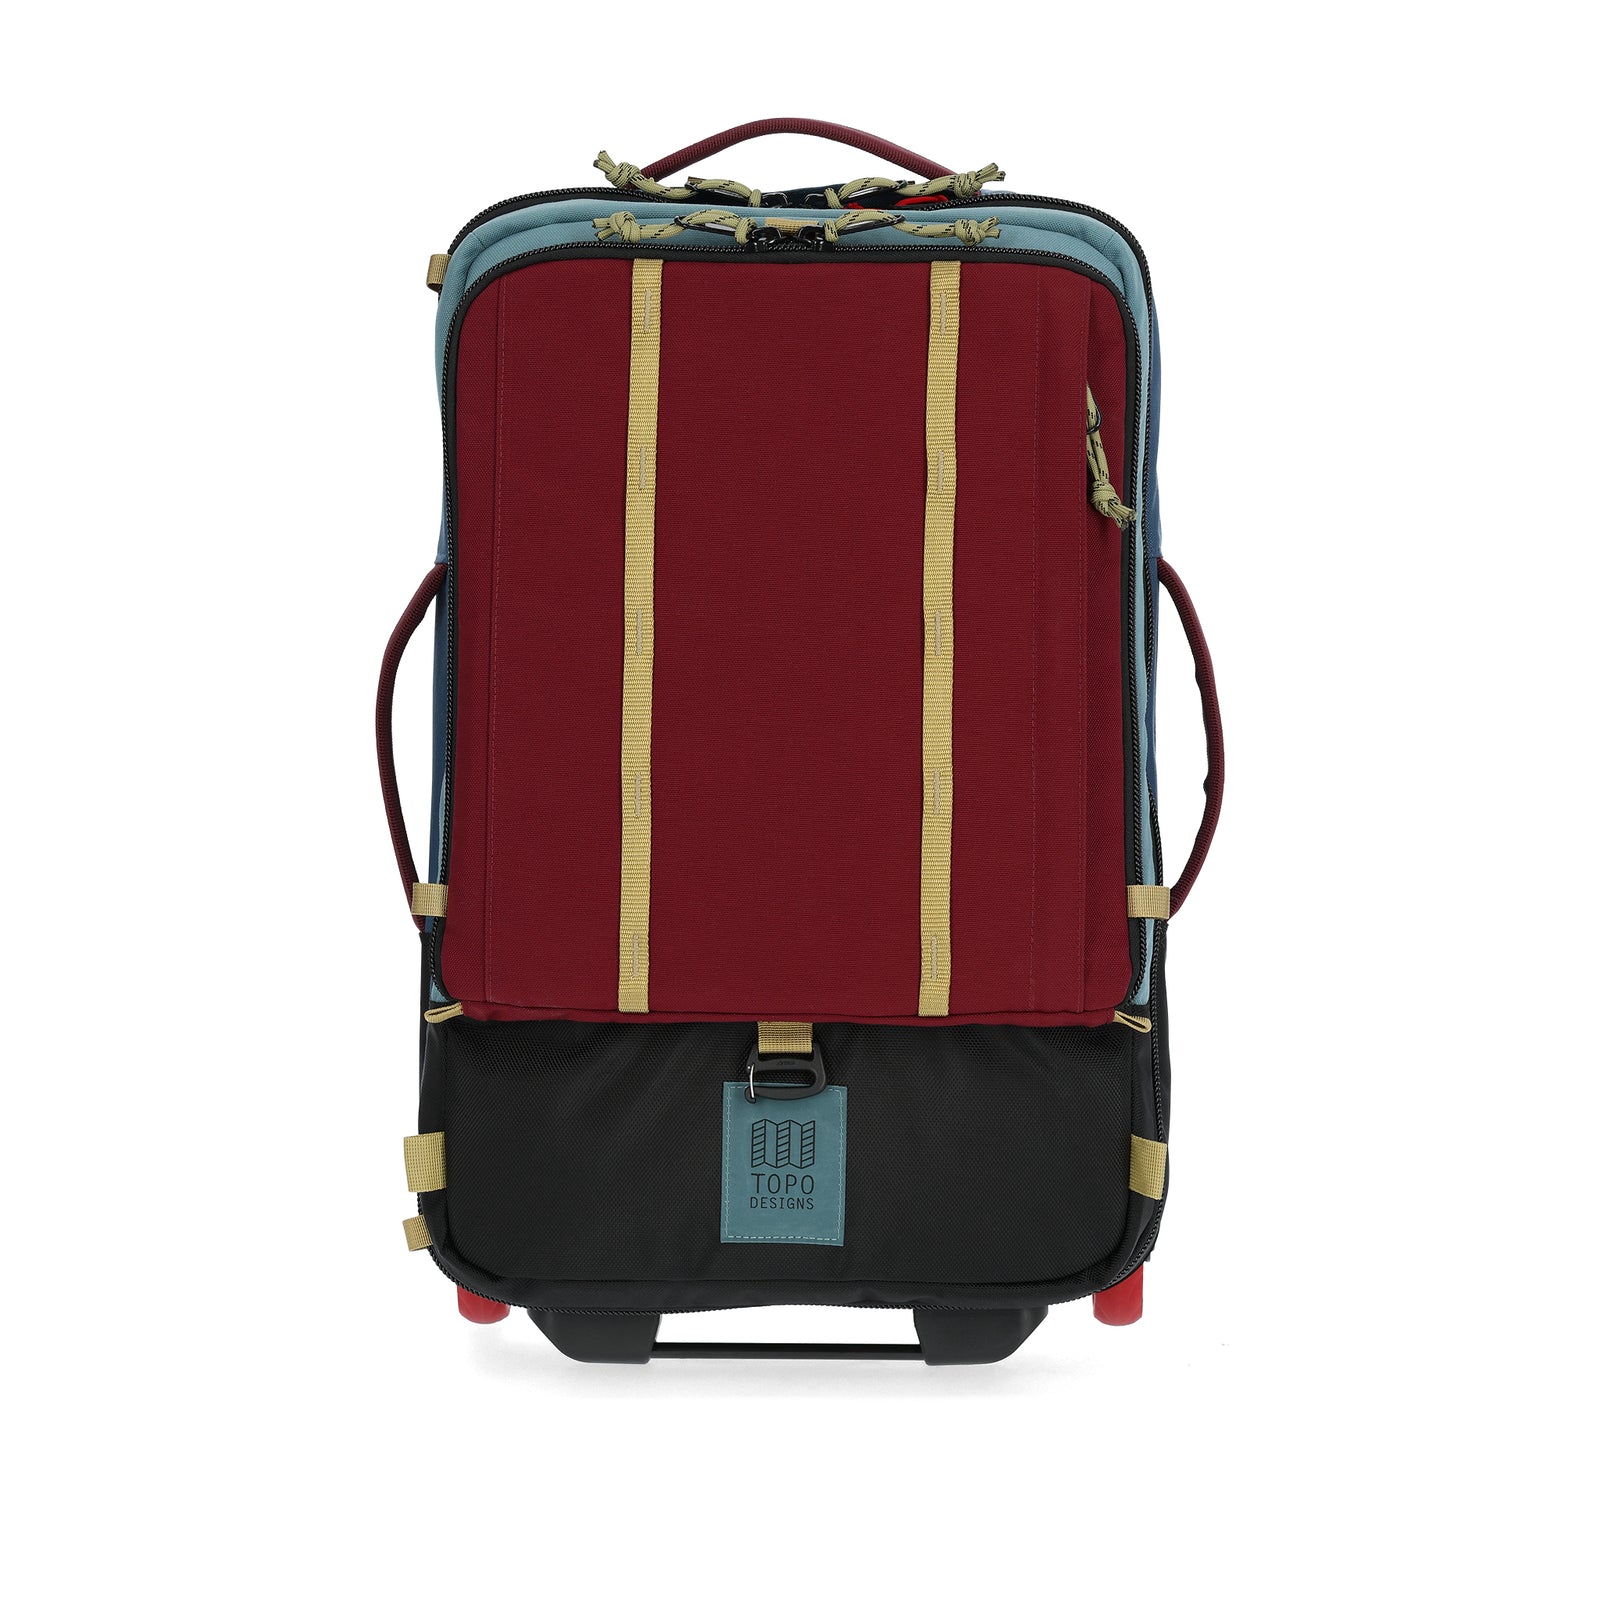 Front View of Topo Designs Global Travel Bag Roller  in "Dark Denim / Burgundy"